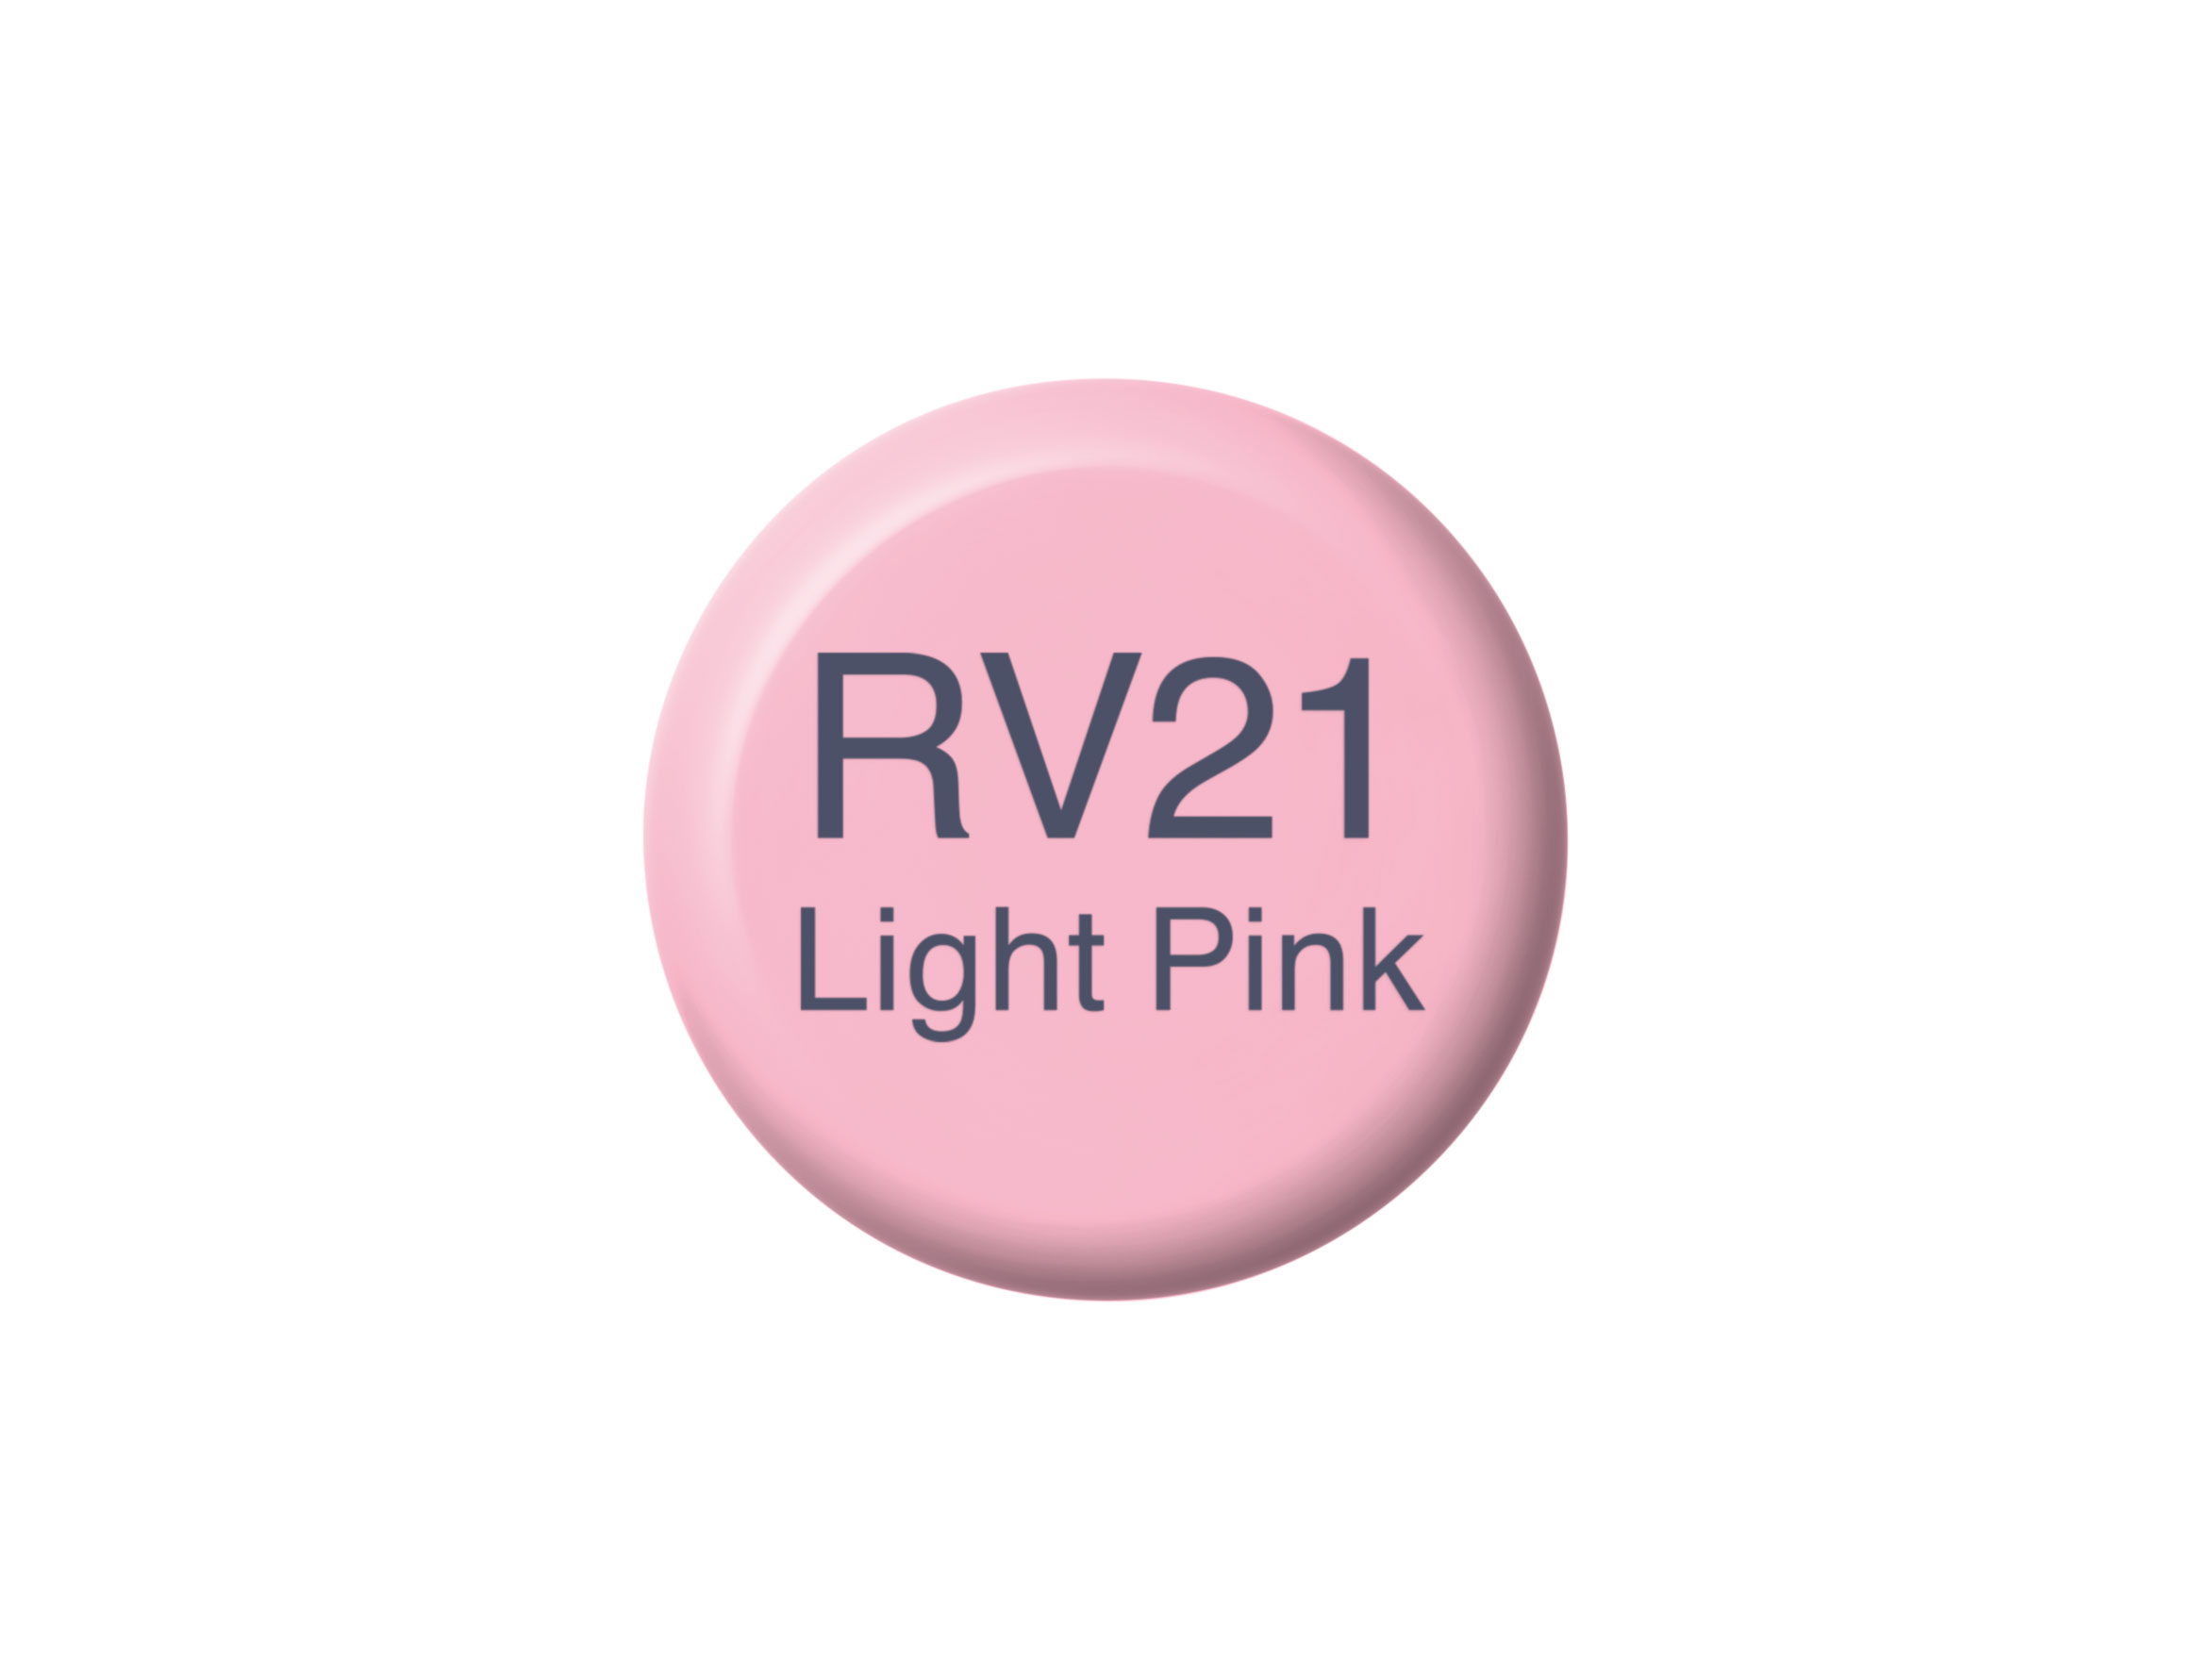 Copic Ink RV21 Light Pink